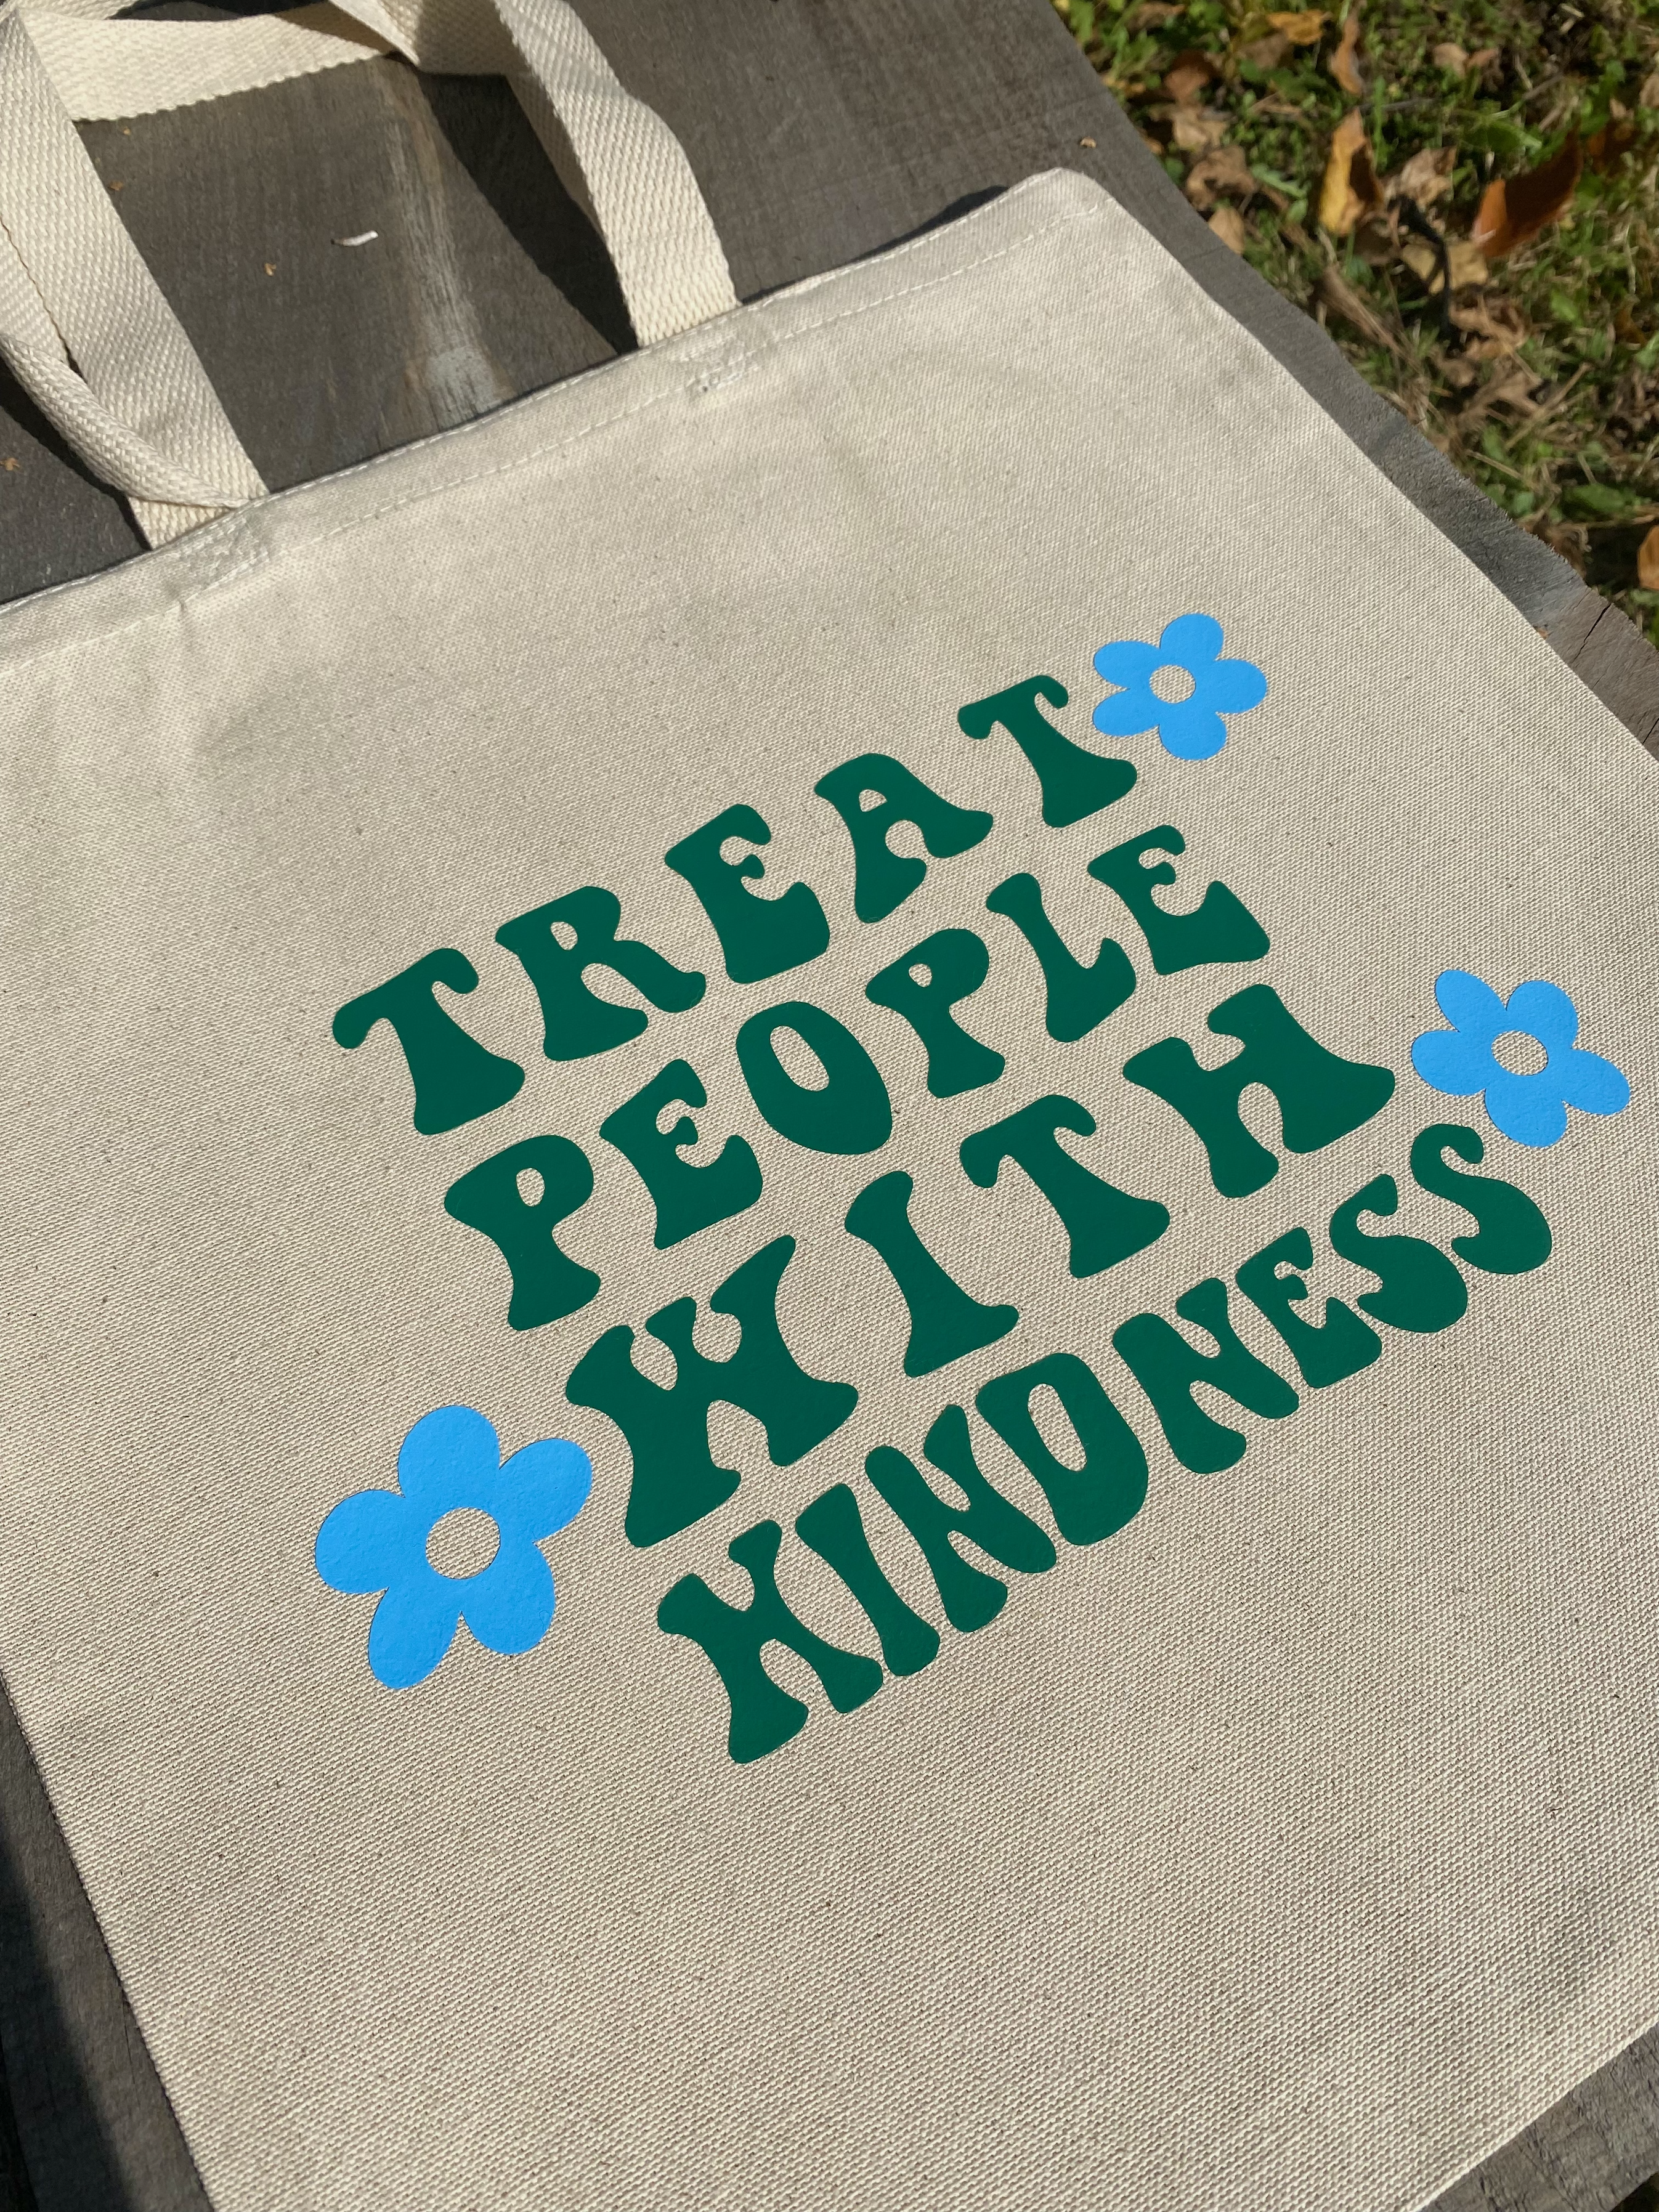 Tote bag - Kindness